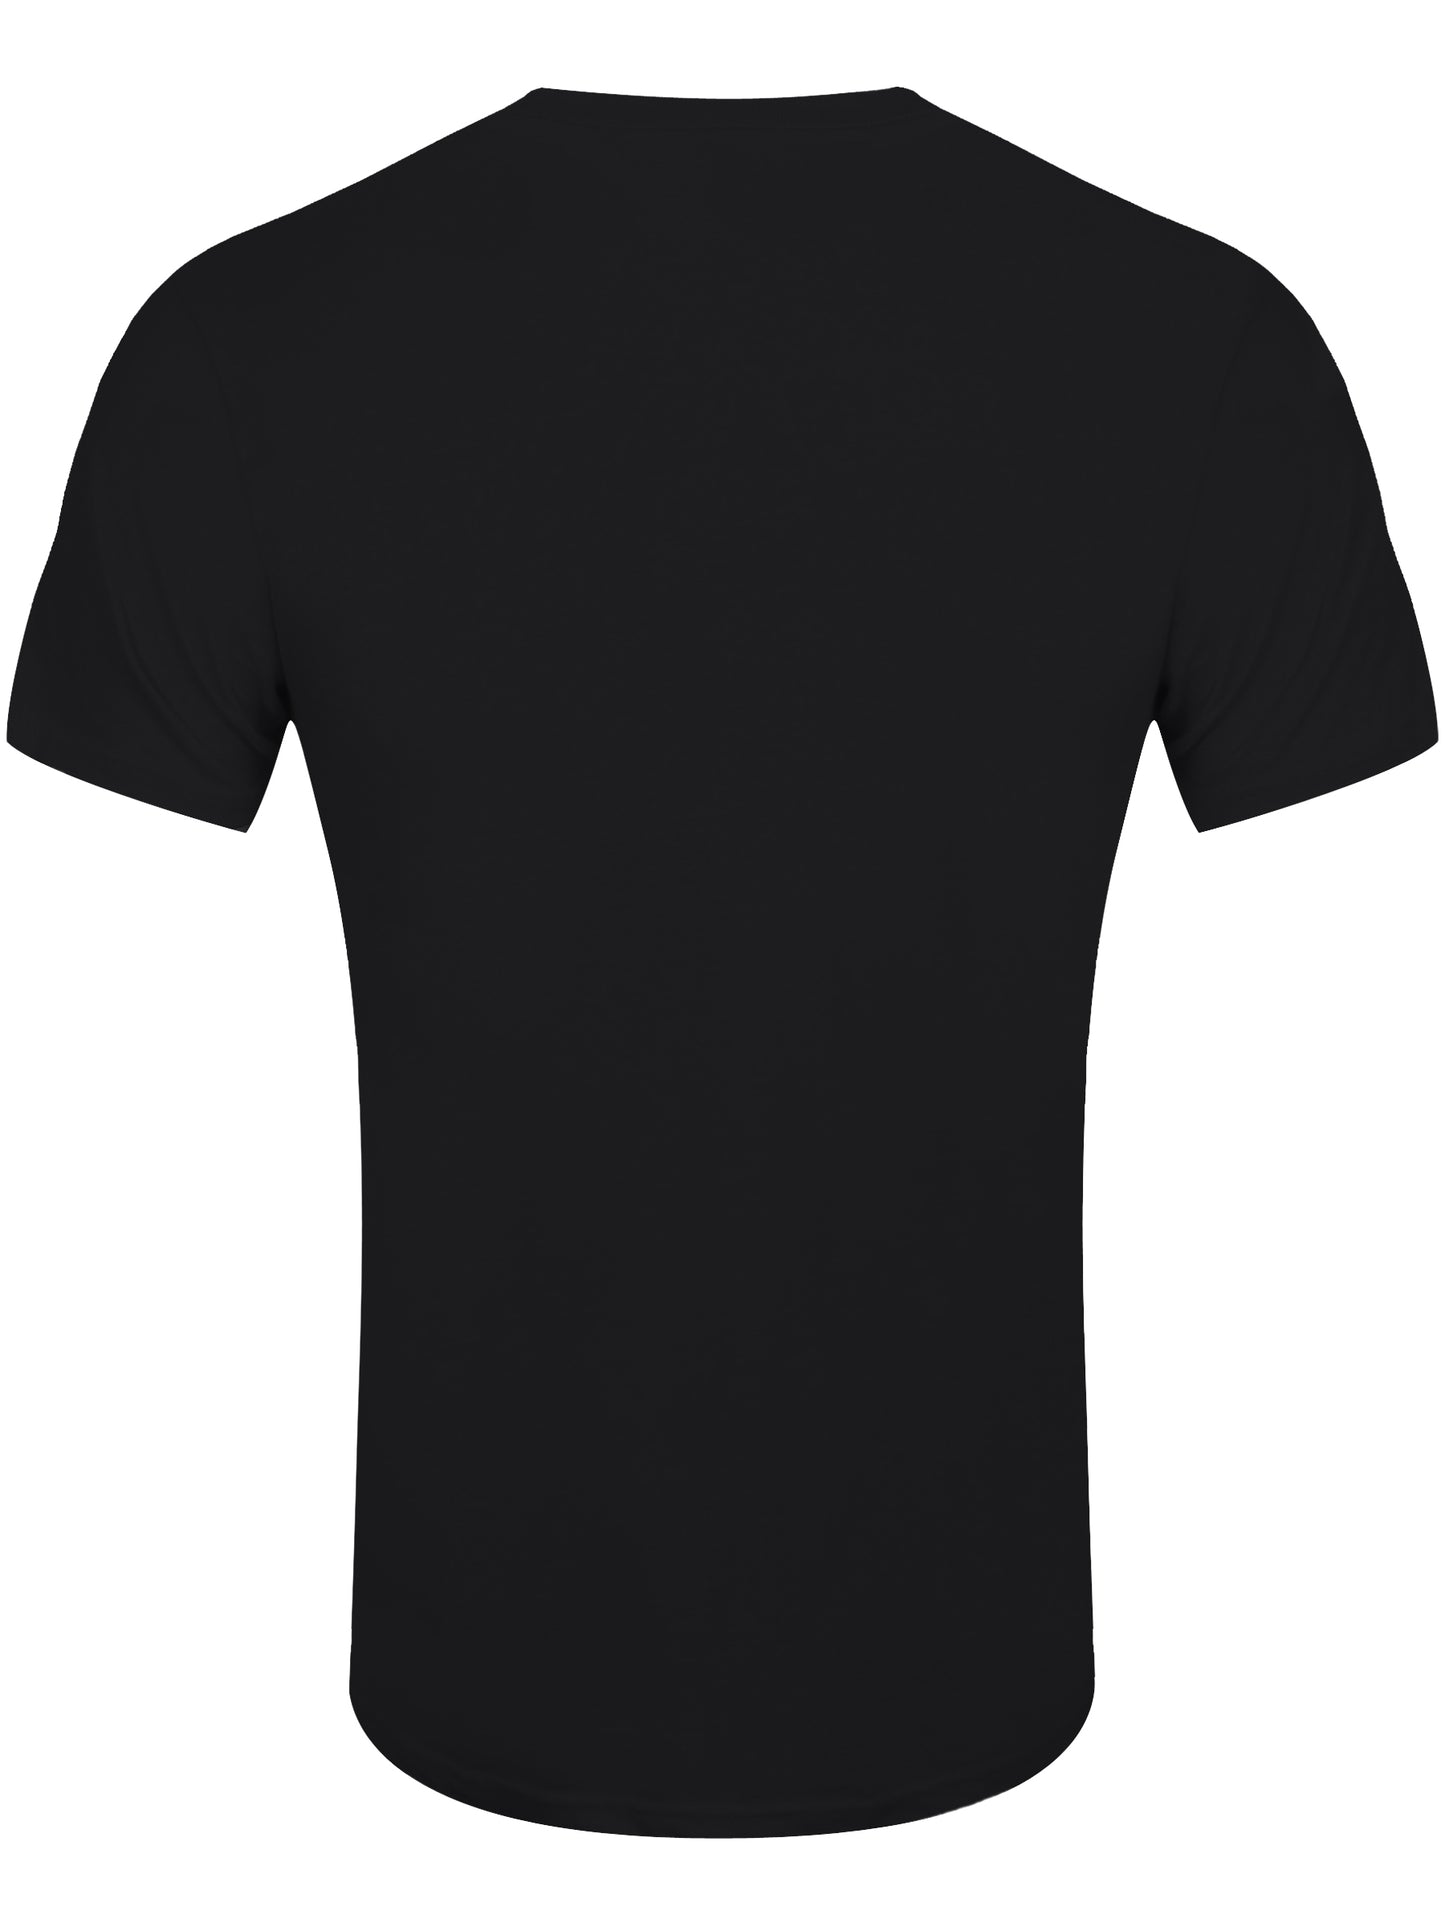 Five Finger Death Punch War Soldier Men's Black T-Shirt